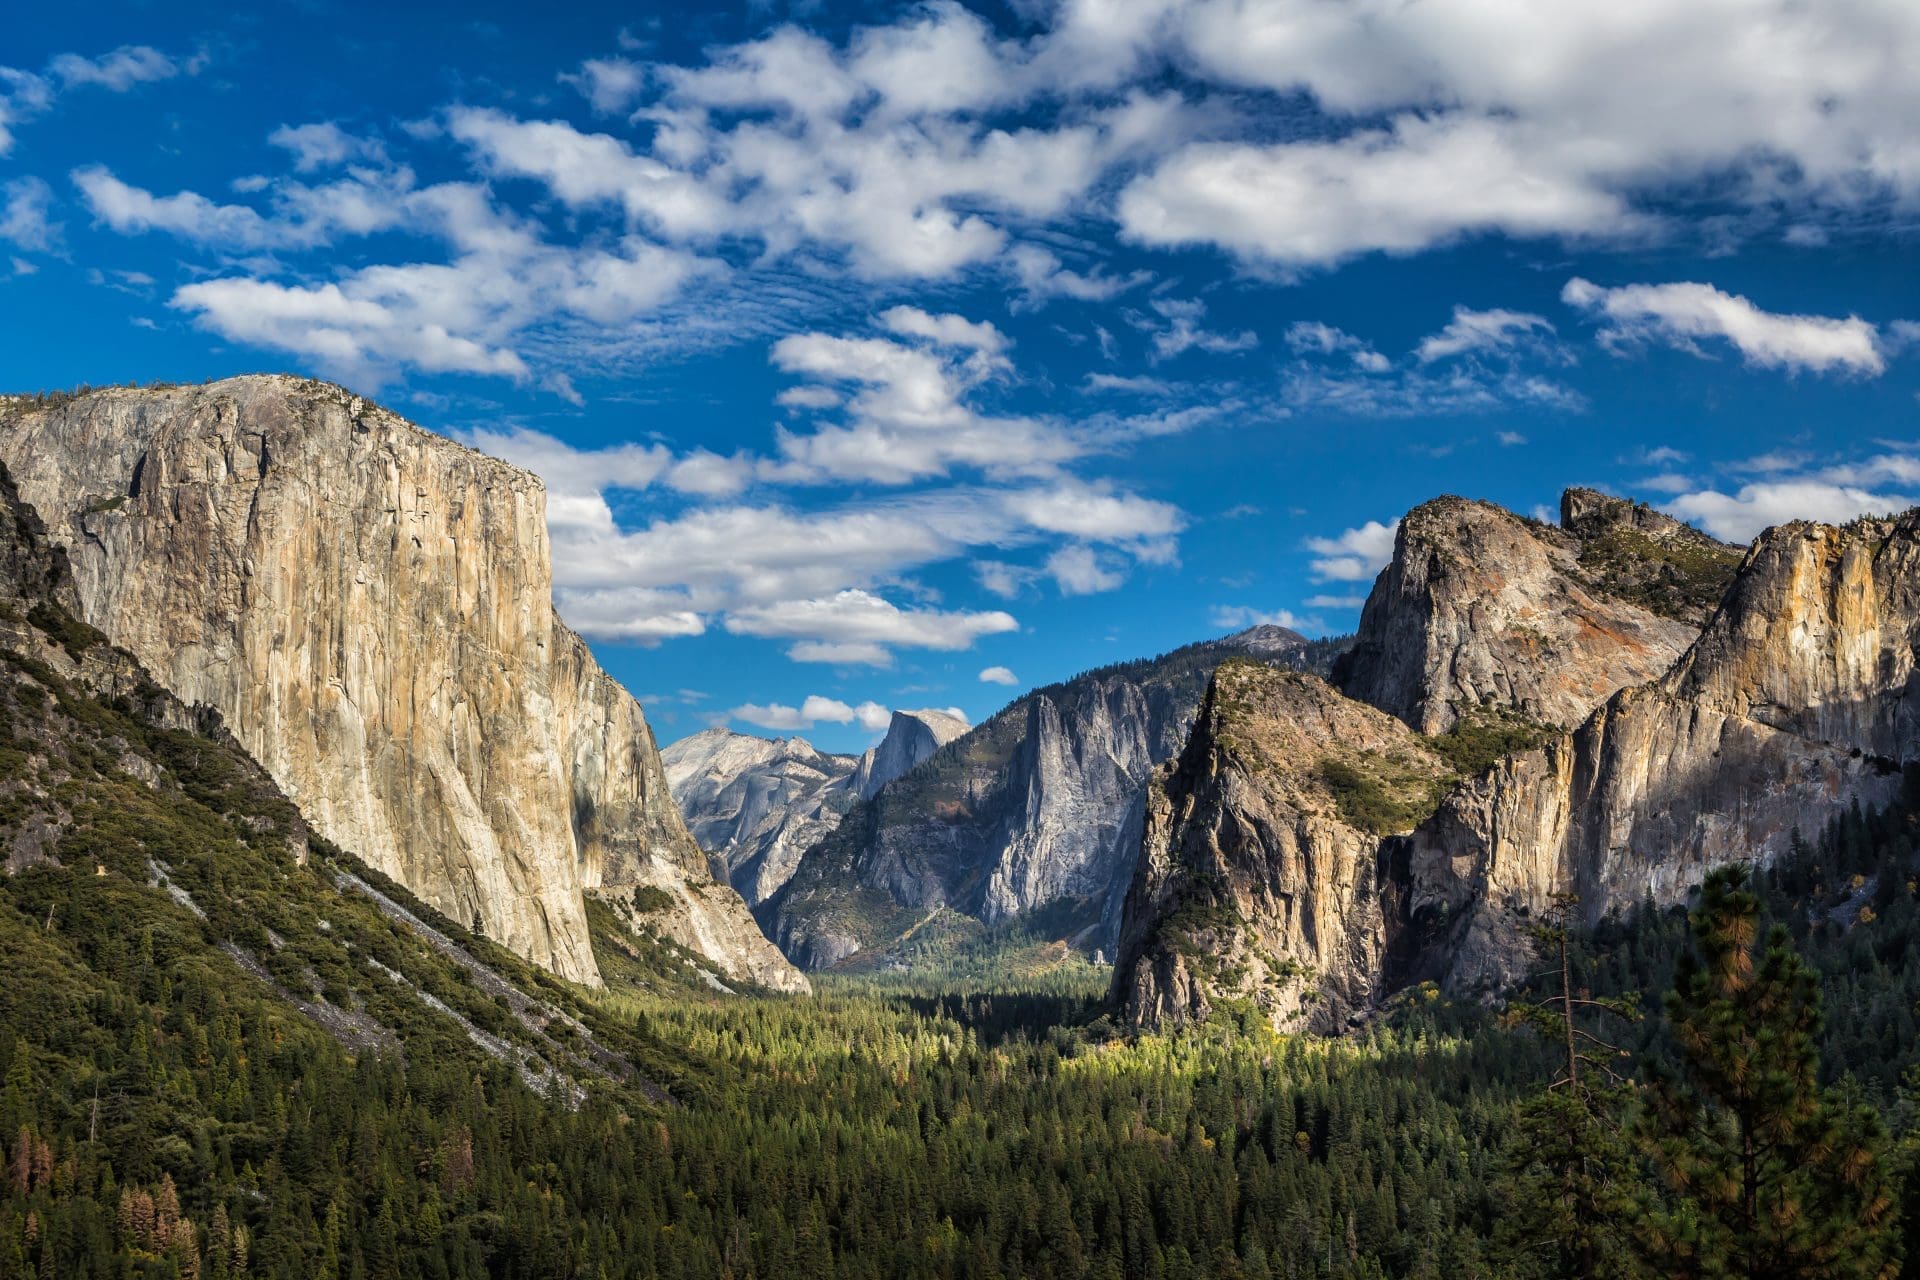 Why is Yosemite So Popular?